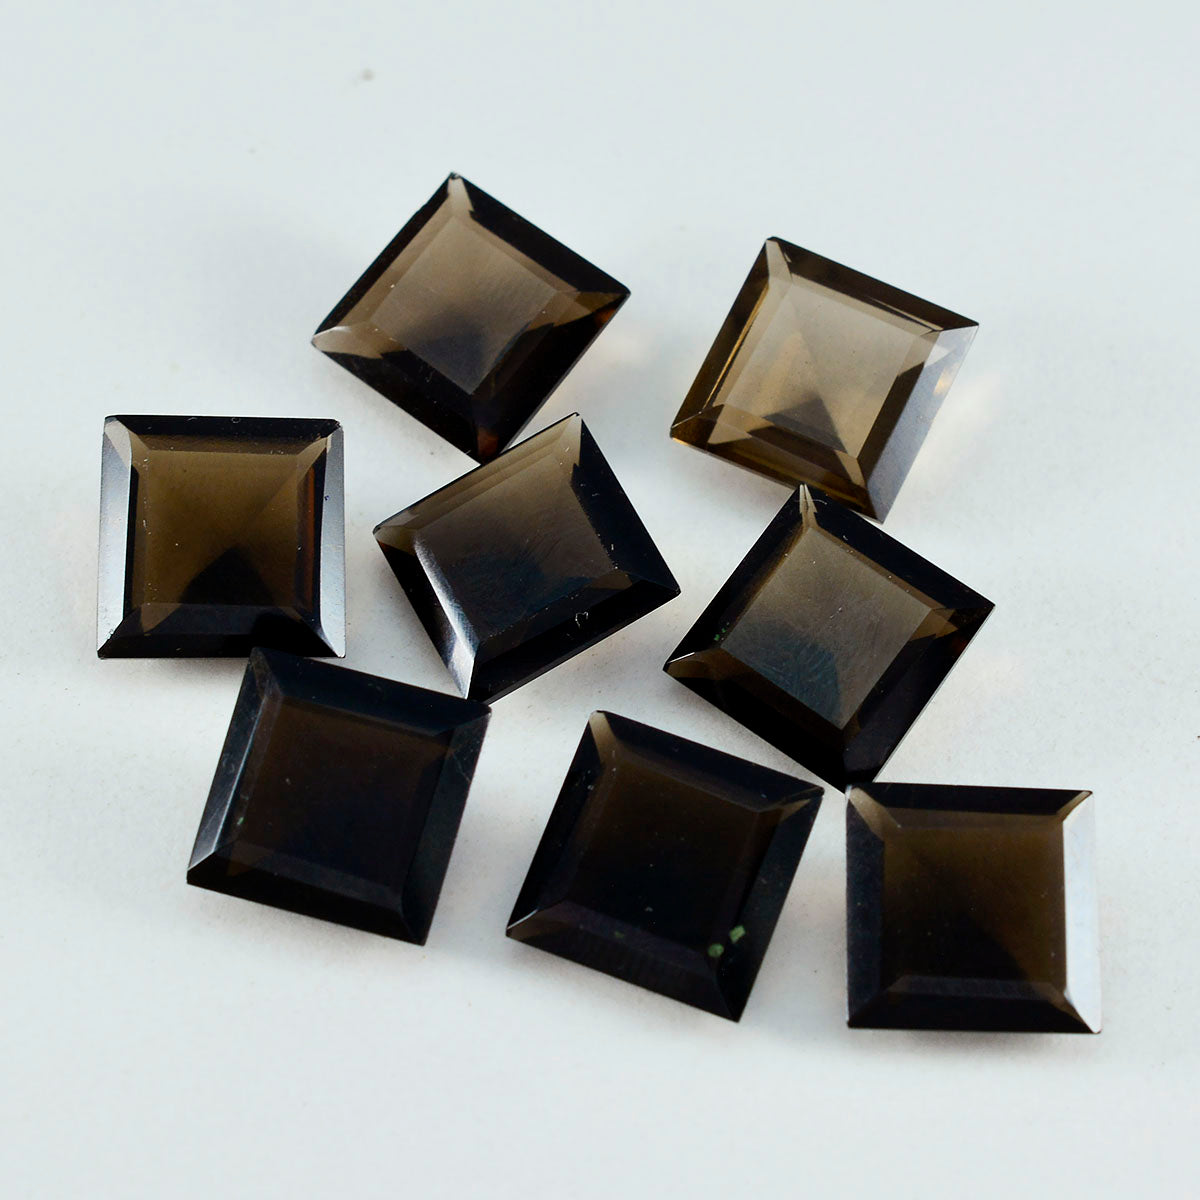 Riyogems 1PC natuurlijke bruine rookkwarts gefacetteerd 13x13 mm vierkante vorm verbazingwekkende kwaliteit edelsteen